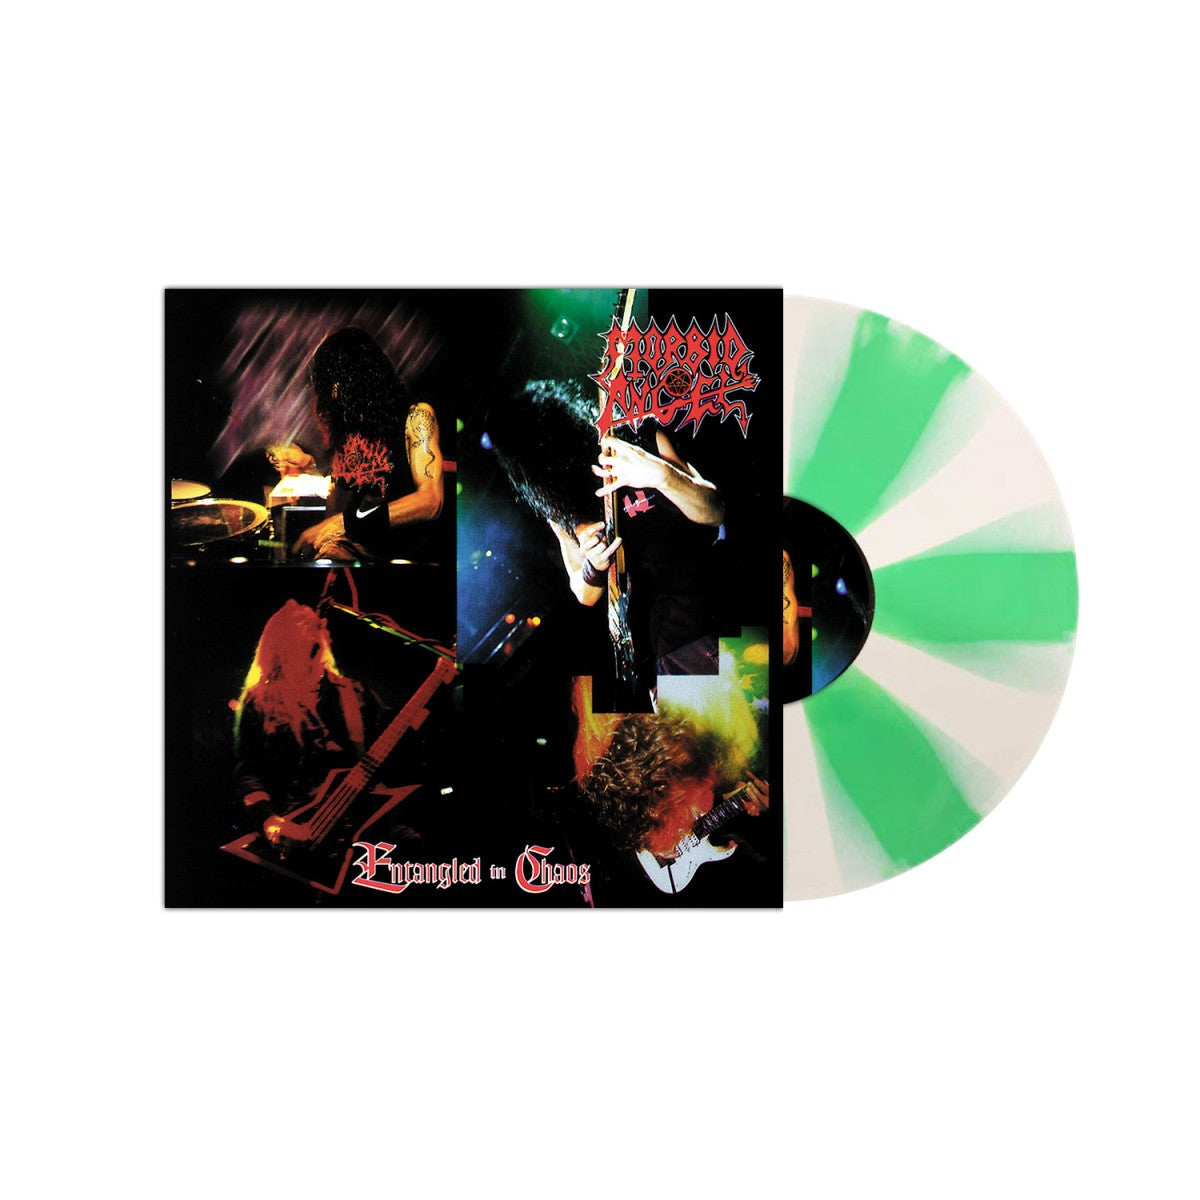 Morbid Angel "Entangled In Chaos" Green /White Pinwheel Vinyl - ON DEMAND PRE-ORDER